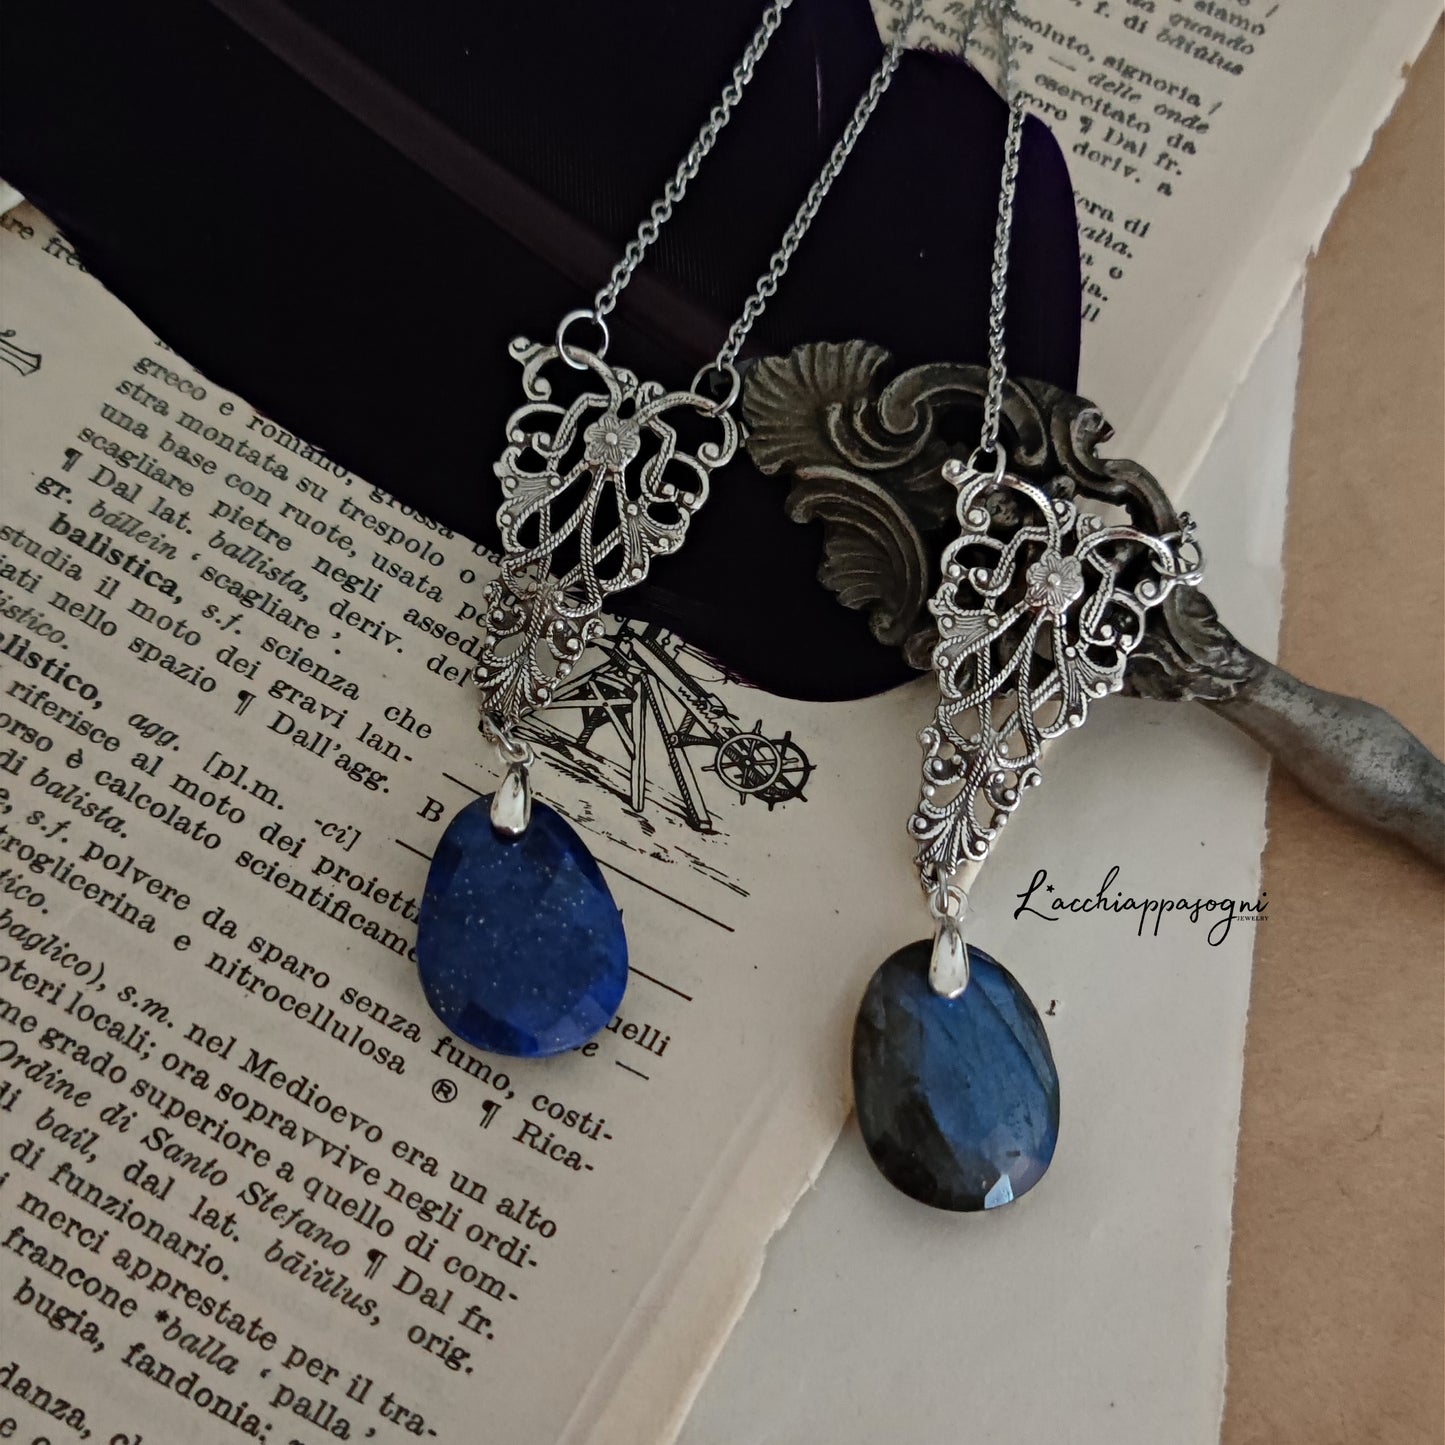 "Elvish Dream" necklace with Labradorite/Lapislazuli